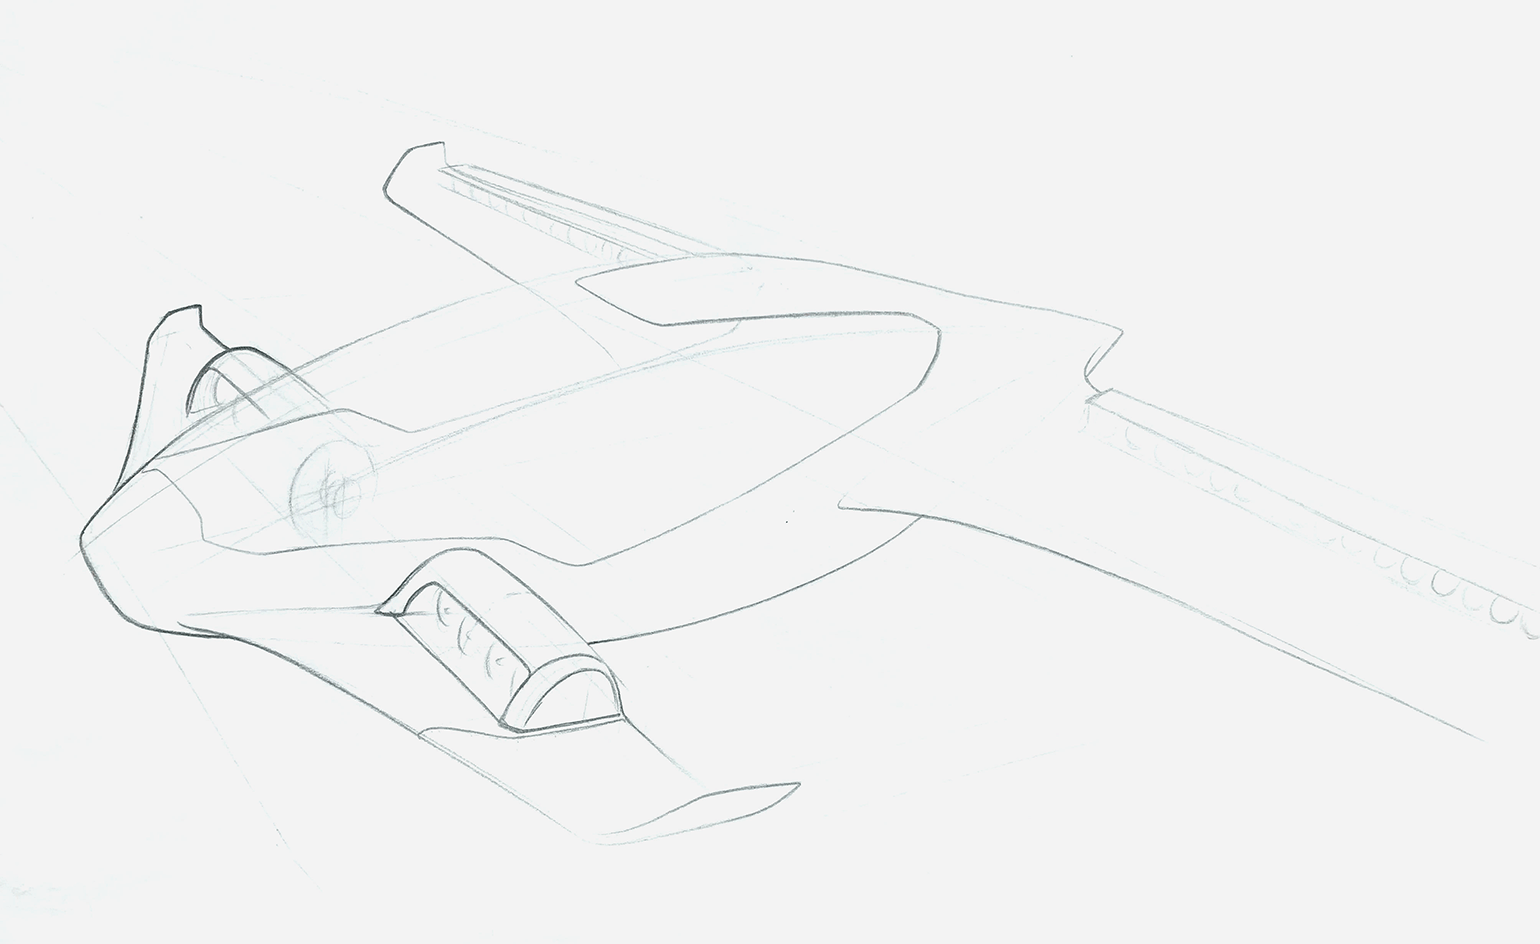 New sketches: Lilium air jet inspired by gliding manta ray | Wallpaper